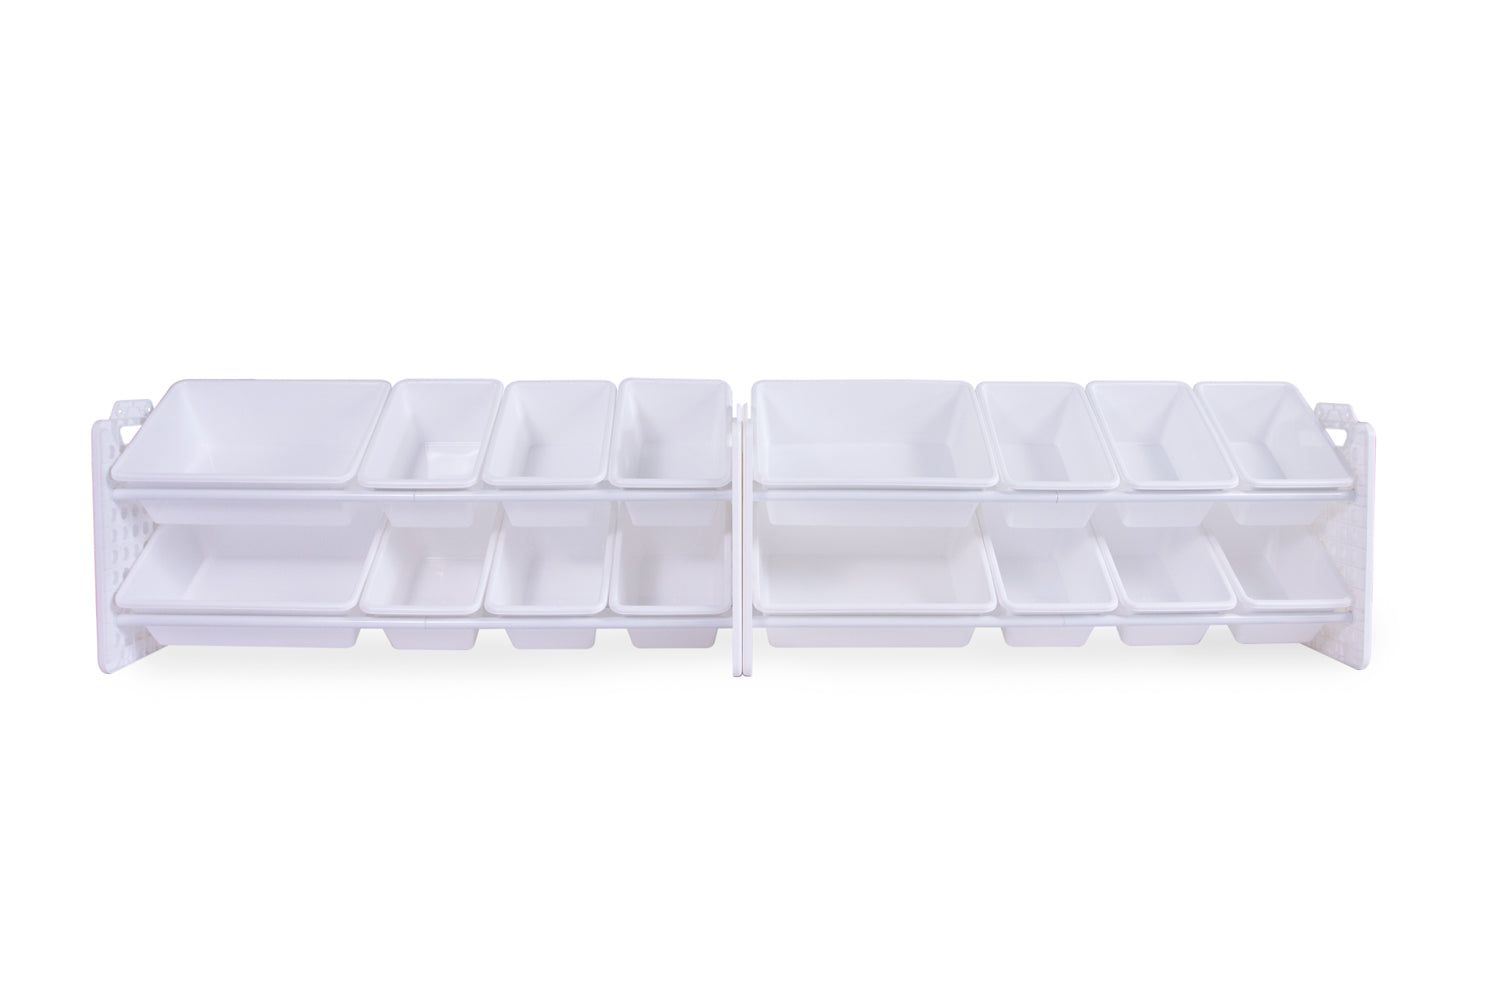 UNiPLAY 16 Bins Toy Storage Organizer - White (UB45711)